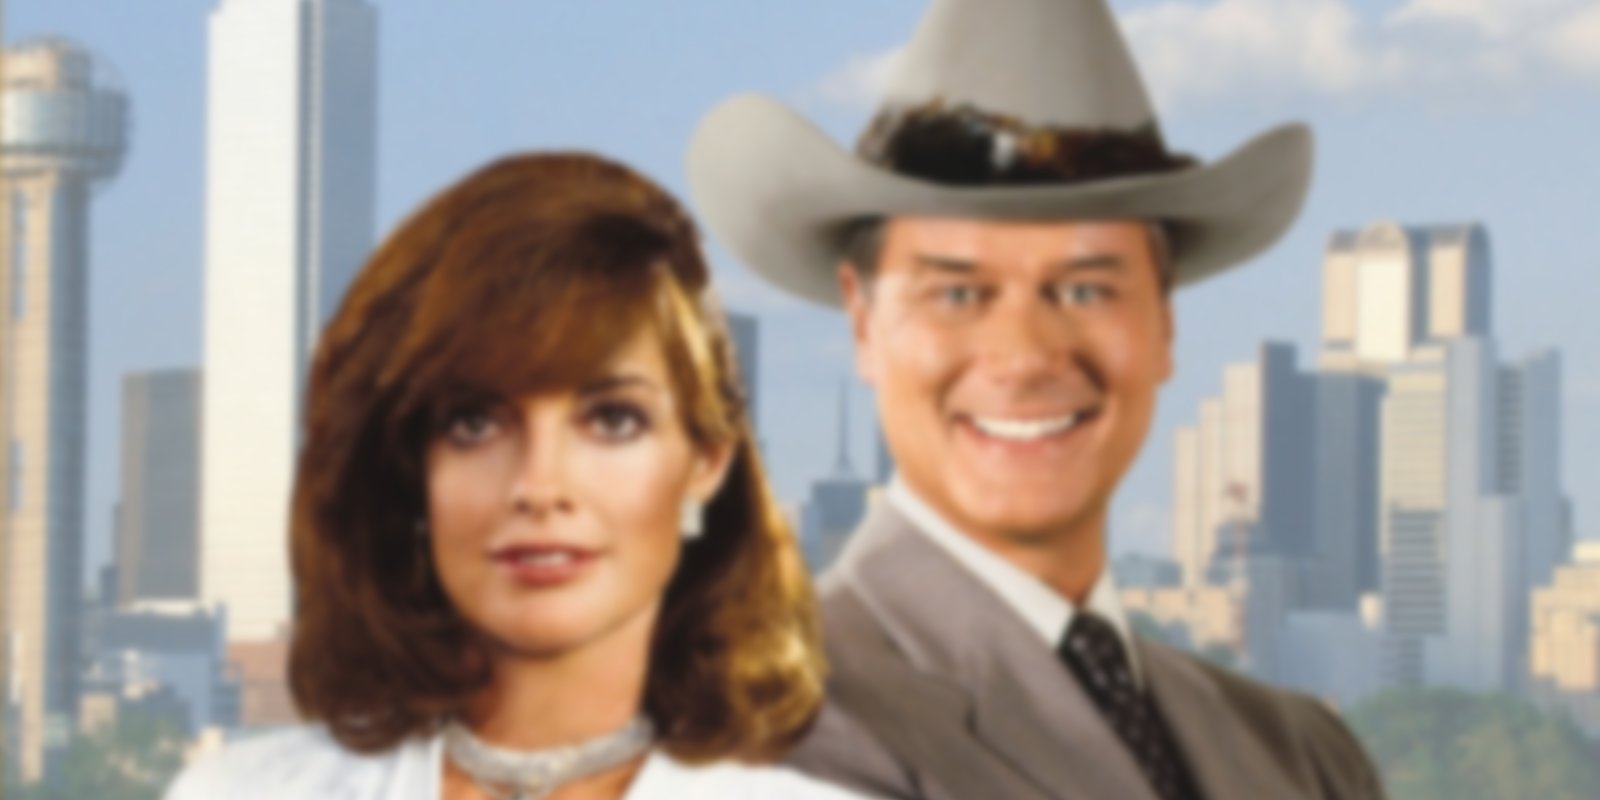 Dallas - Staffel 3